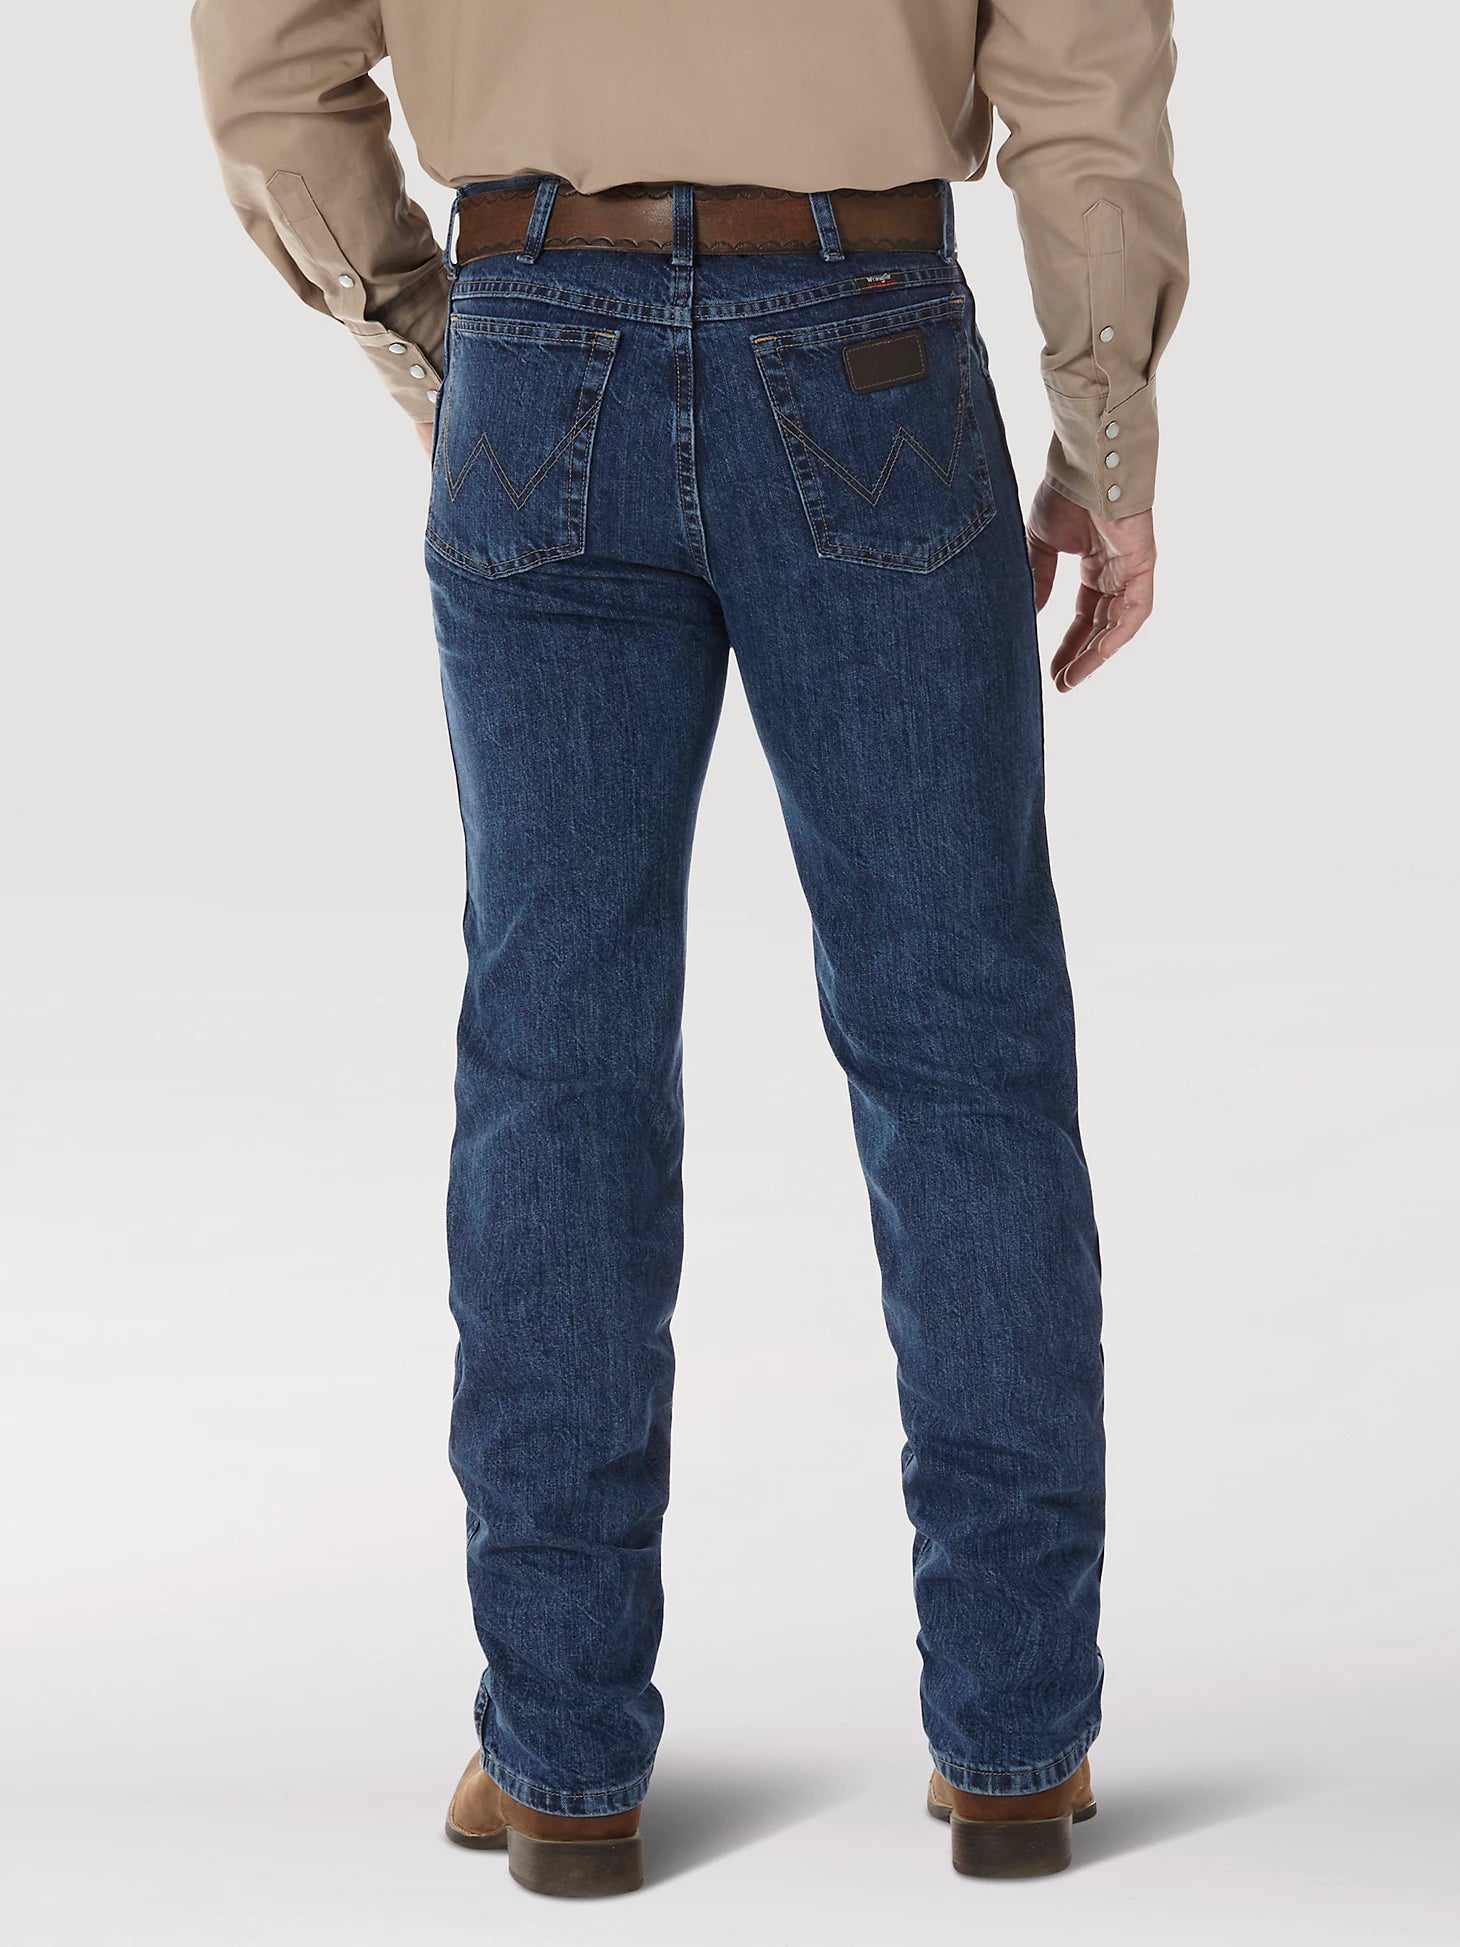 Jeans Wrangler PBR Slim Fit Authentic Stone Caballero